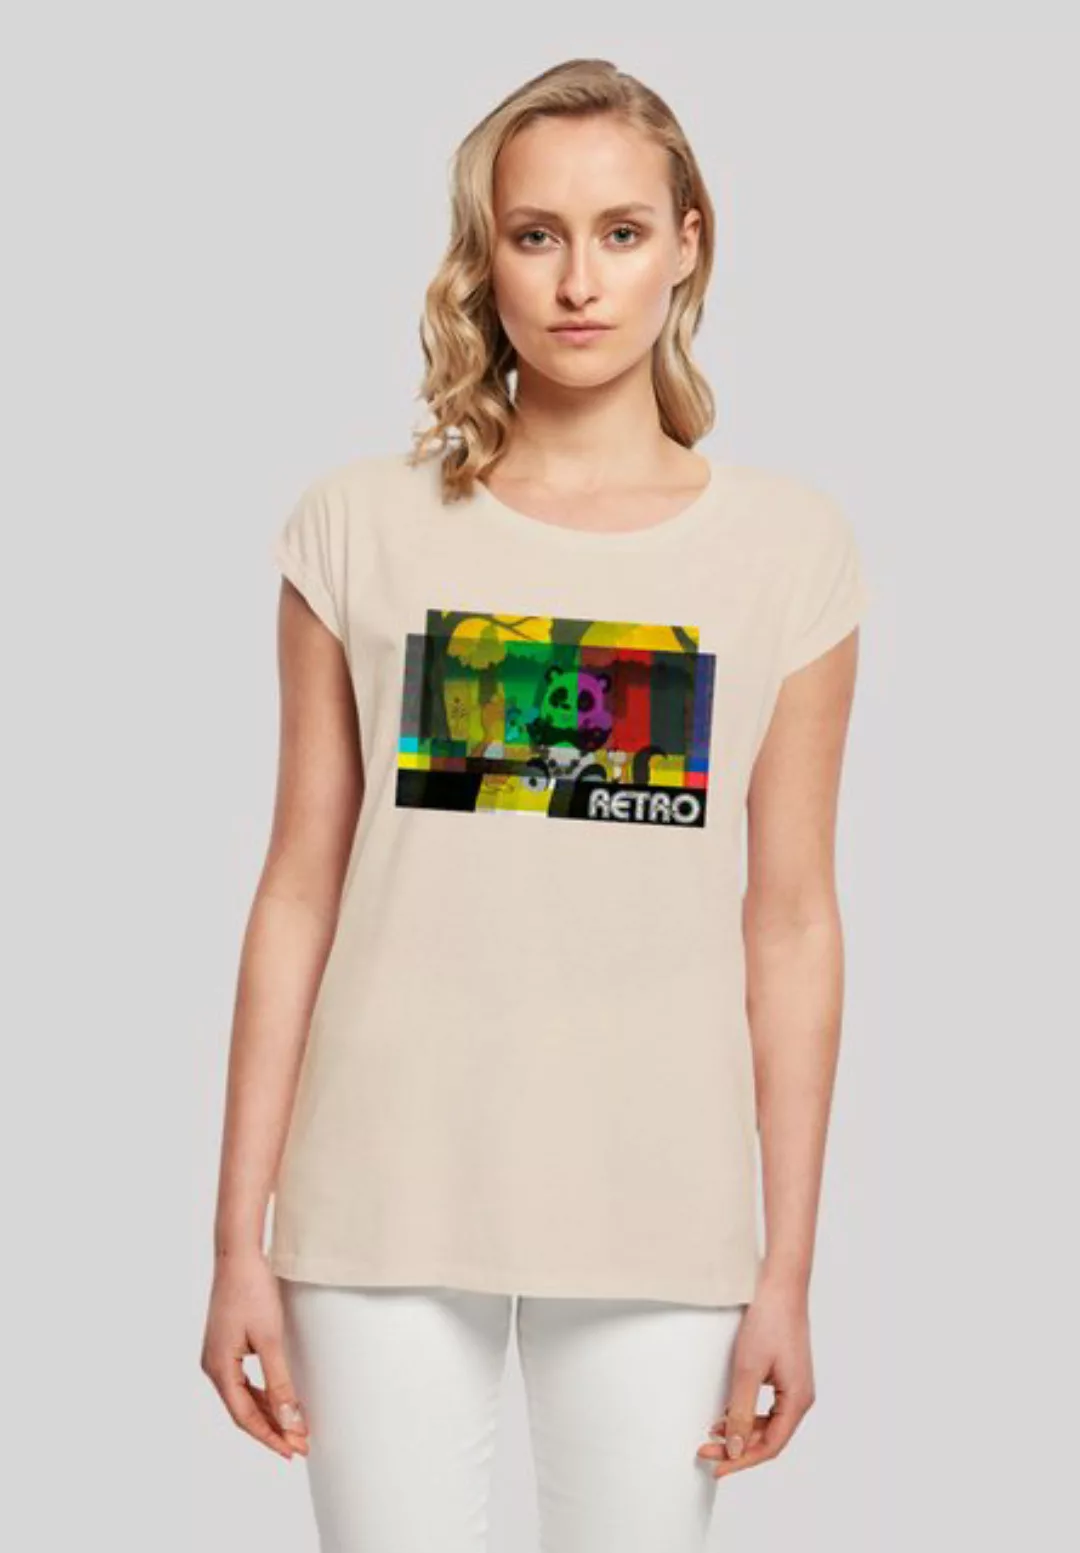 F4NT4STIC T-Shirt Tao Tao Cassette Retro, Heroes of Childhood, TV Serie günstig online kaufen